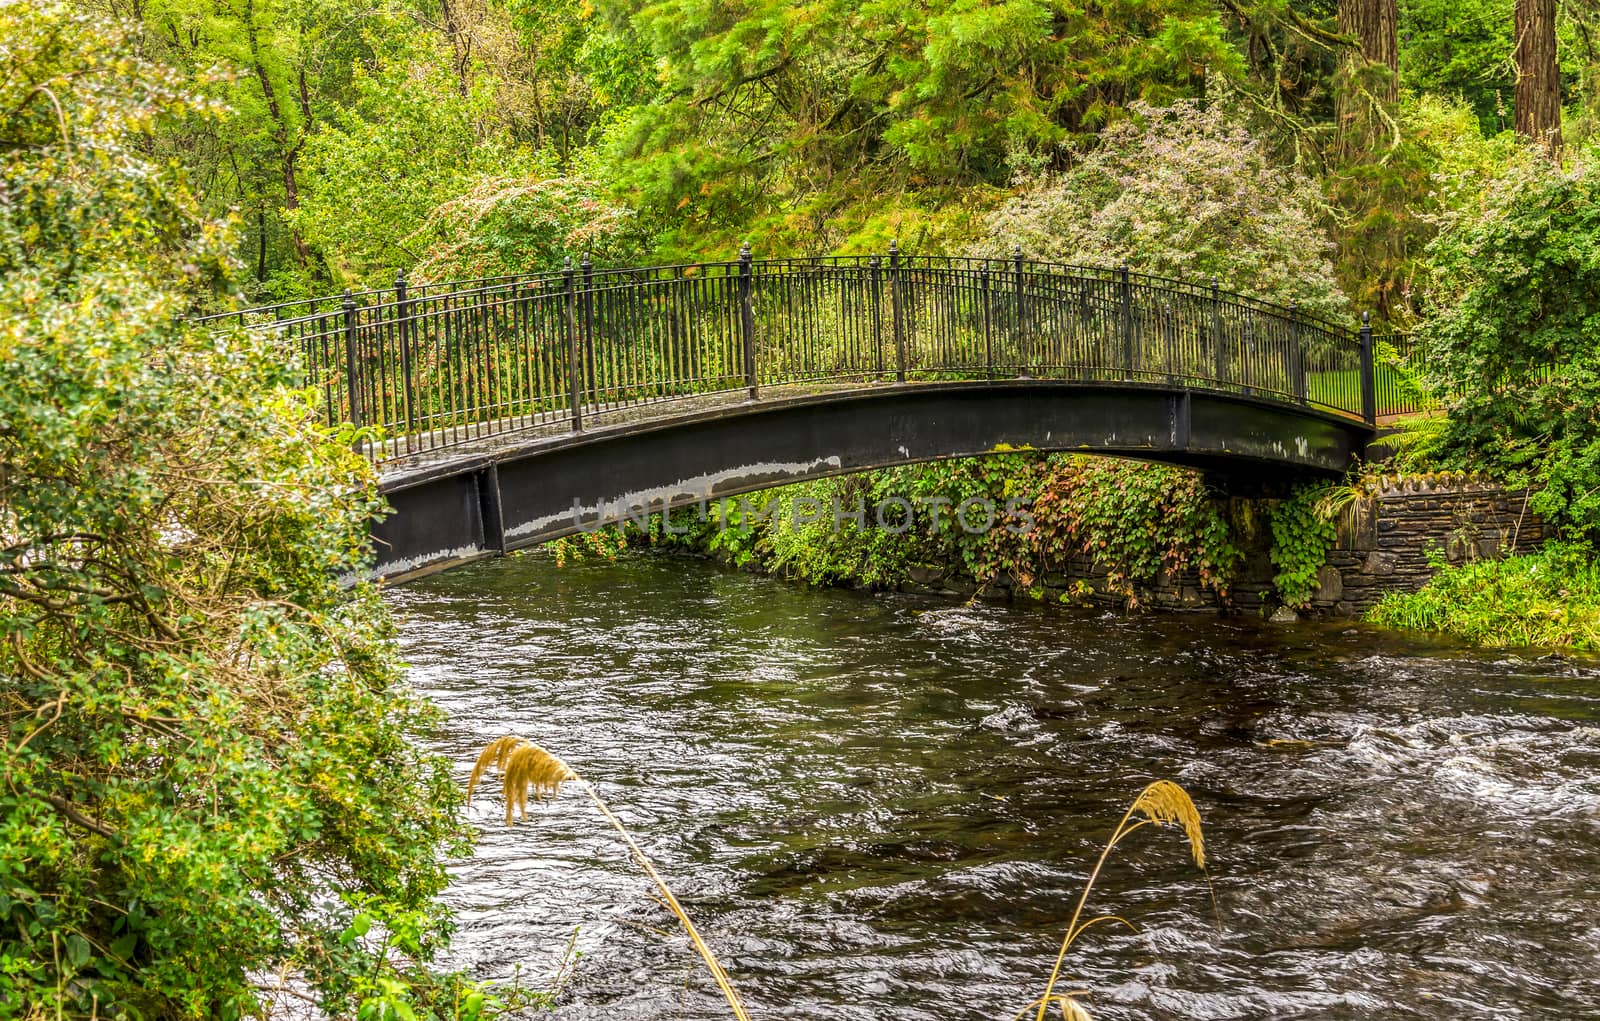 A pedestrian visitor's bridge over river Eachaig in Benmore Botanic Garden, Loch Lomond and the Trossachs National Park, Scotland